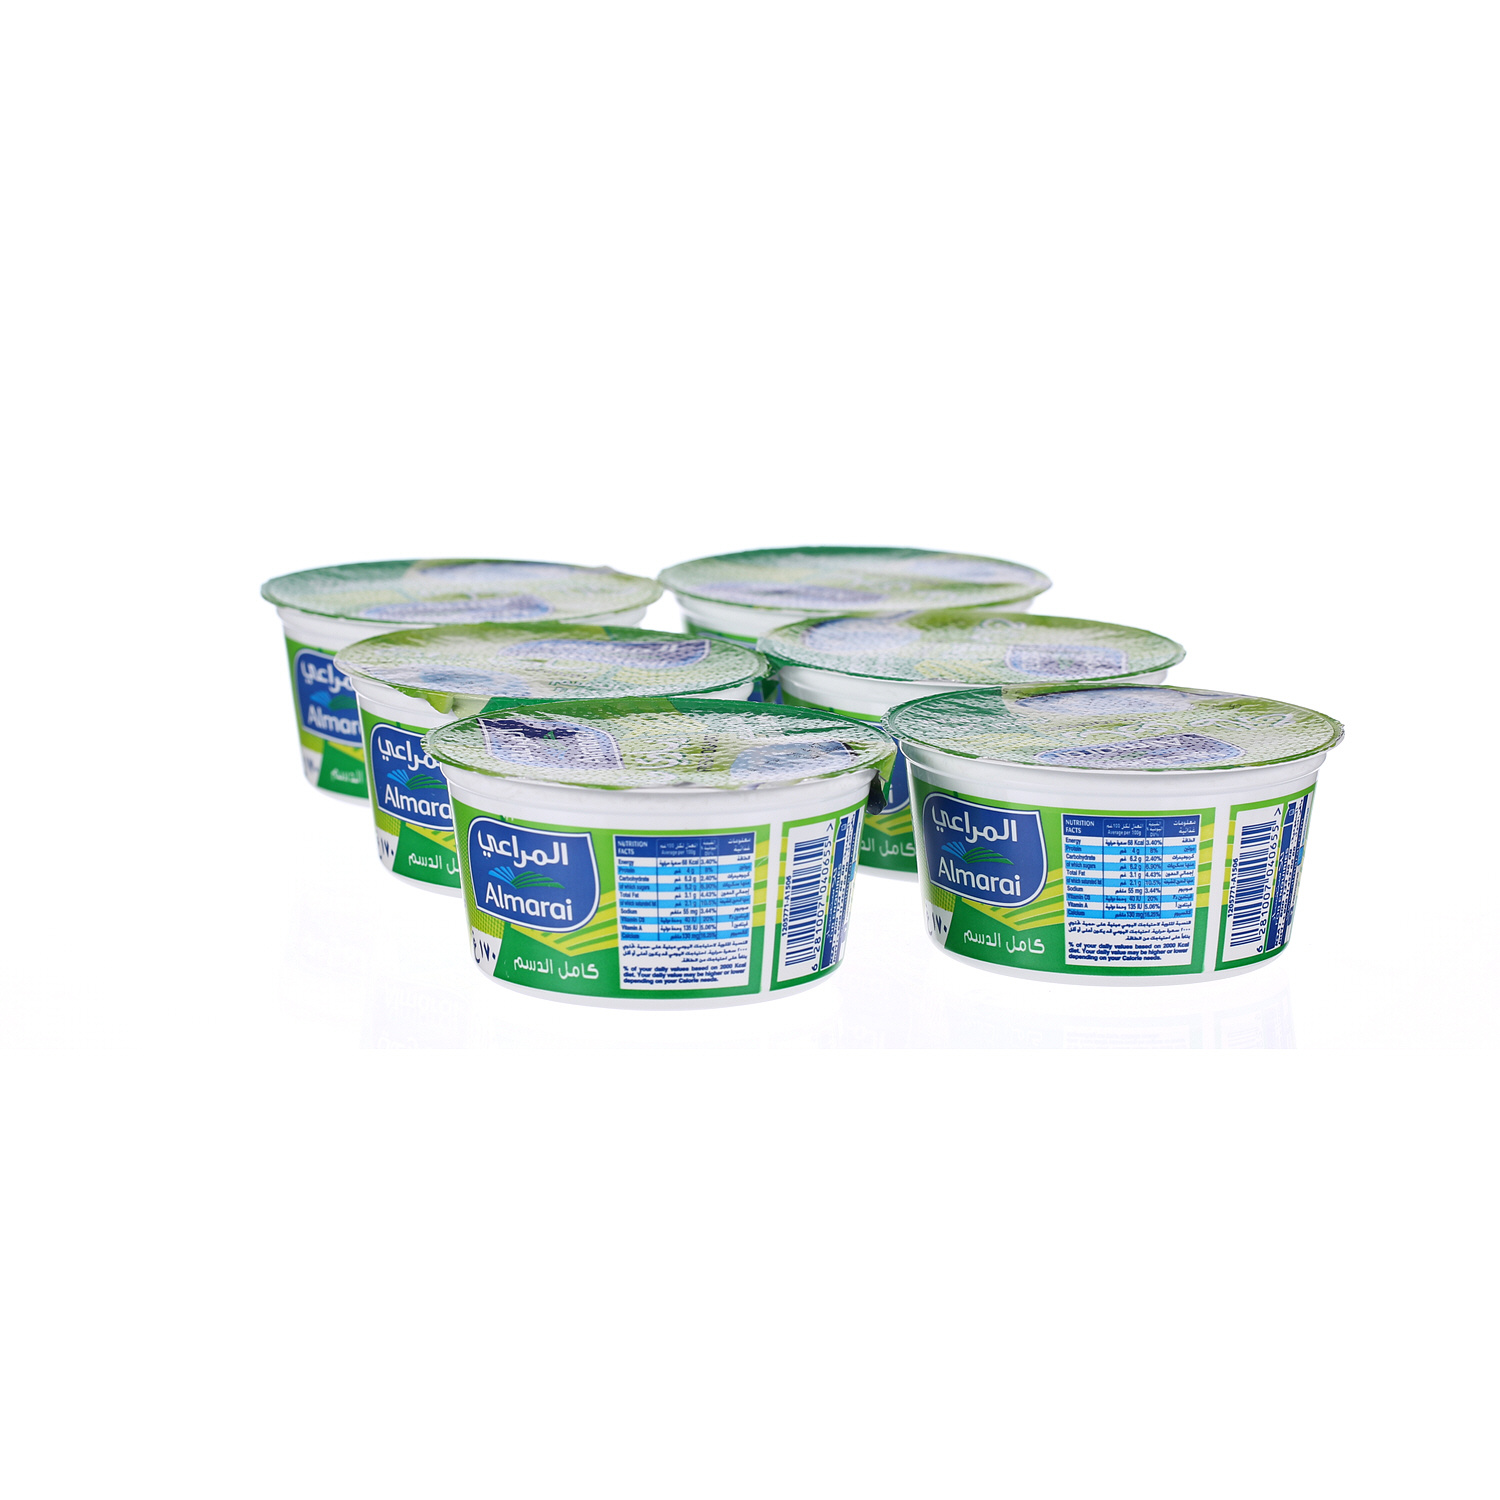 Al Marai Fresh Yoghurt Full Fat 170 g × 6 Pack